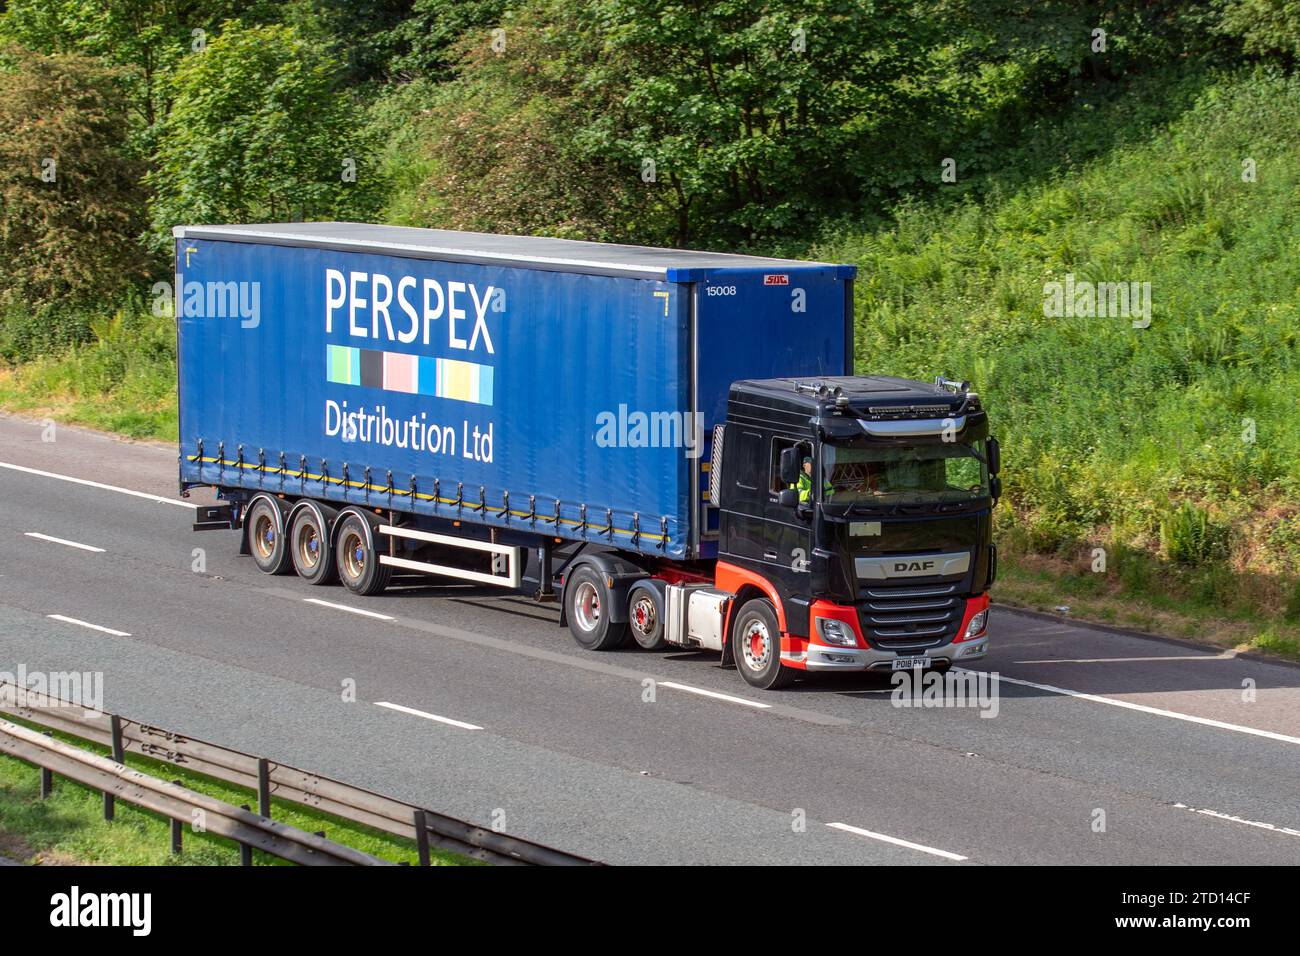 Perspex Distrubution Ltd, Plastic wholesaler in Darwen. Black  DAF 530  curtainsided transport vehcile Stock Photo